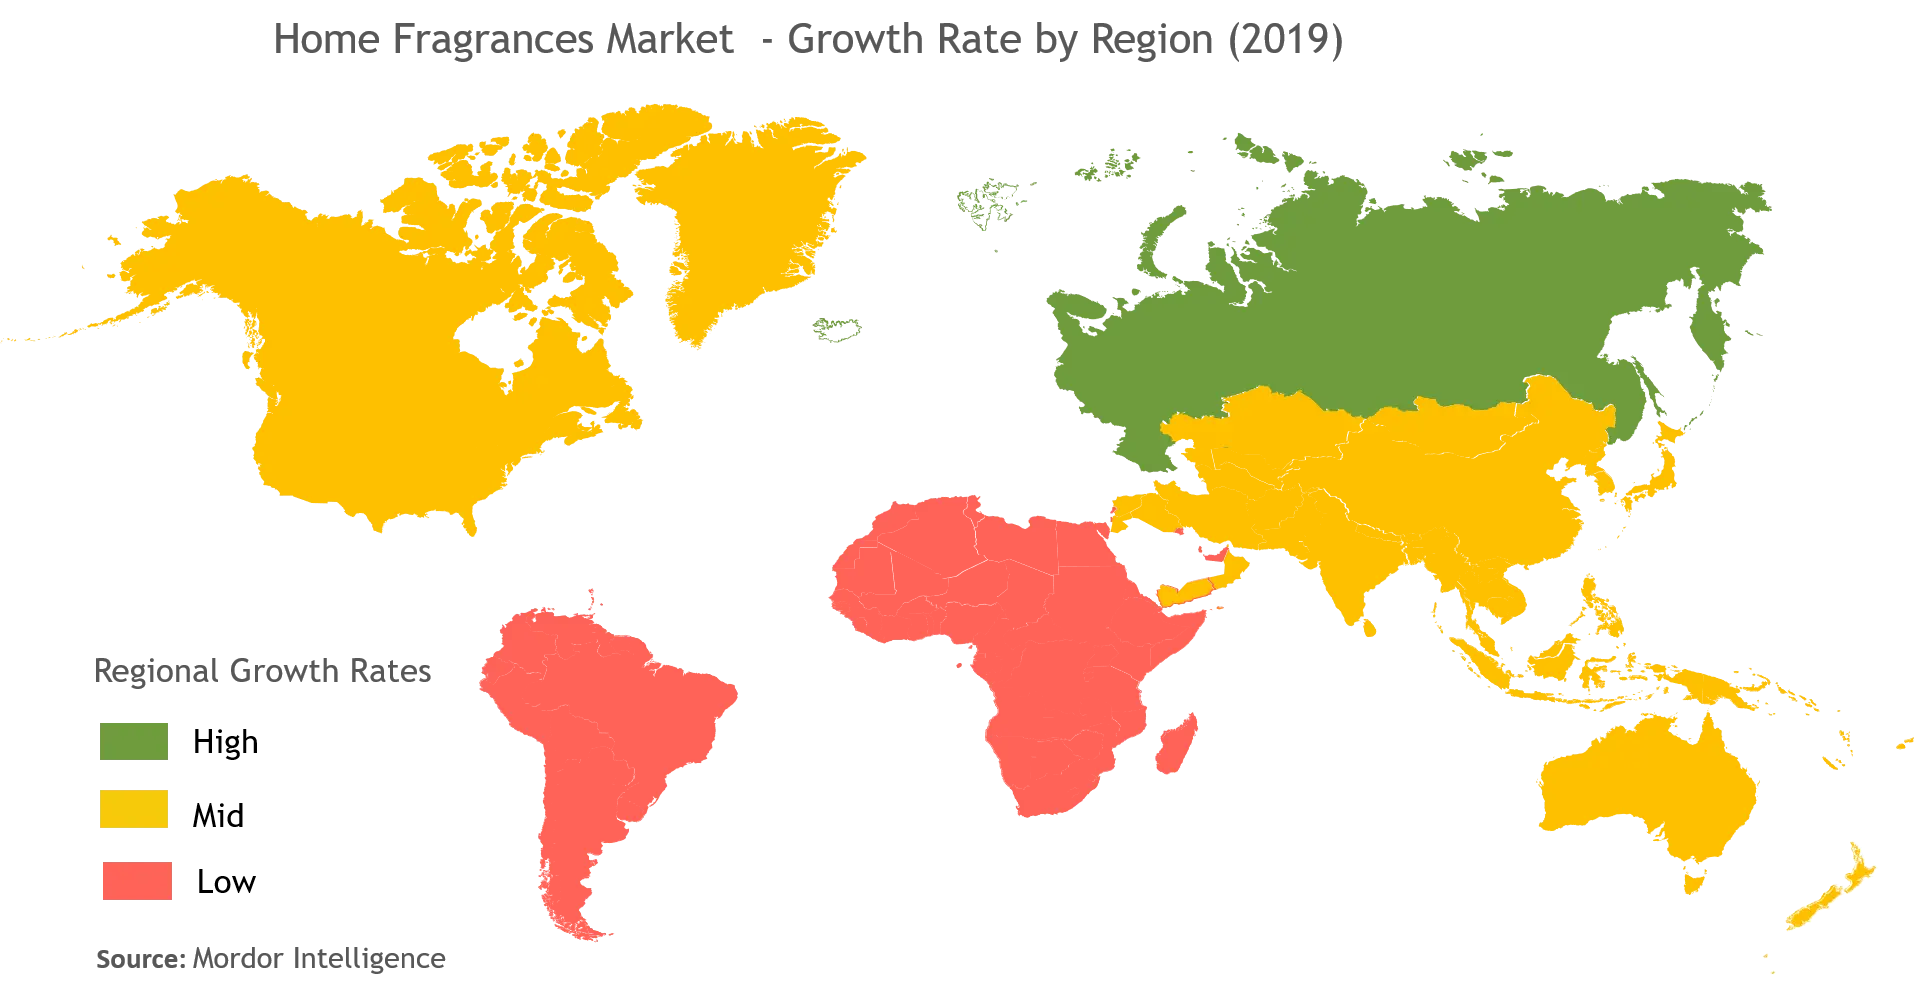 Home Fragrances Market Growth by Region